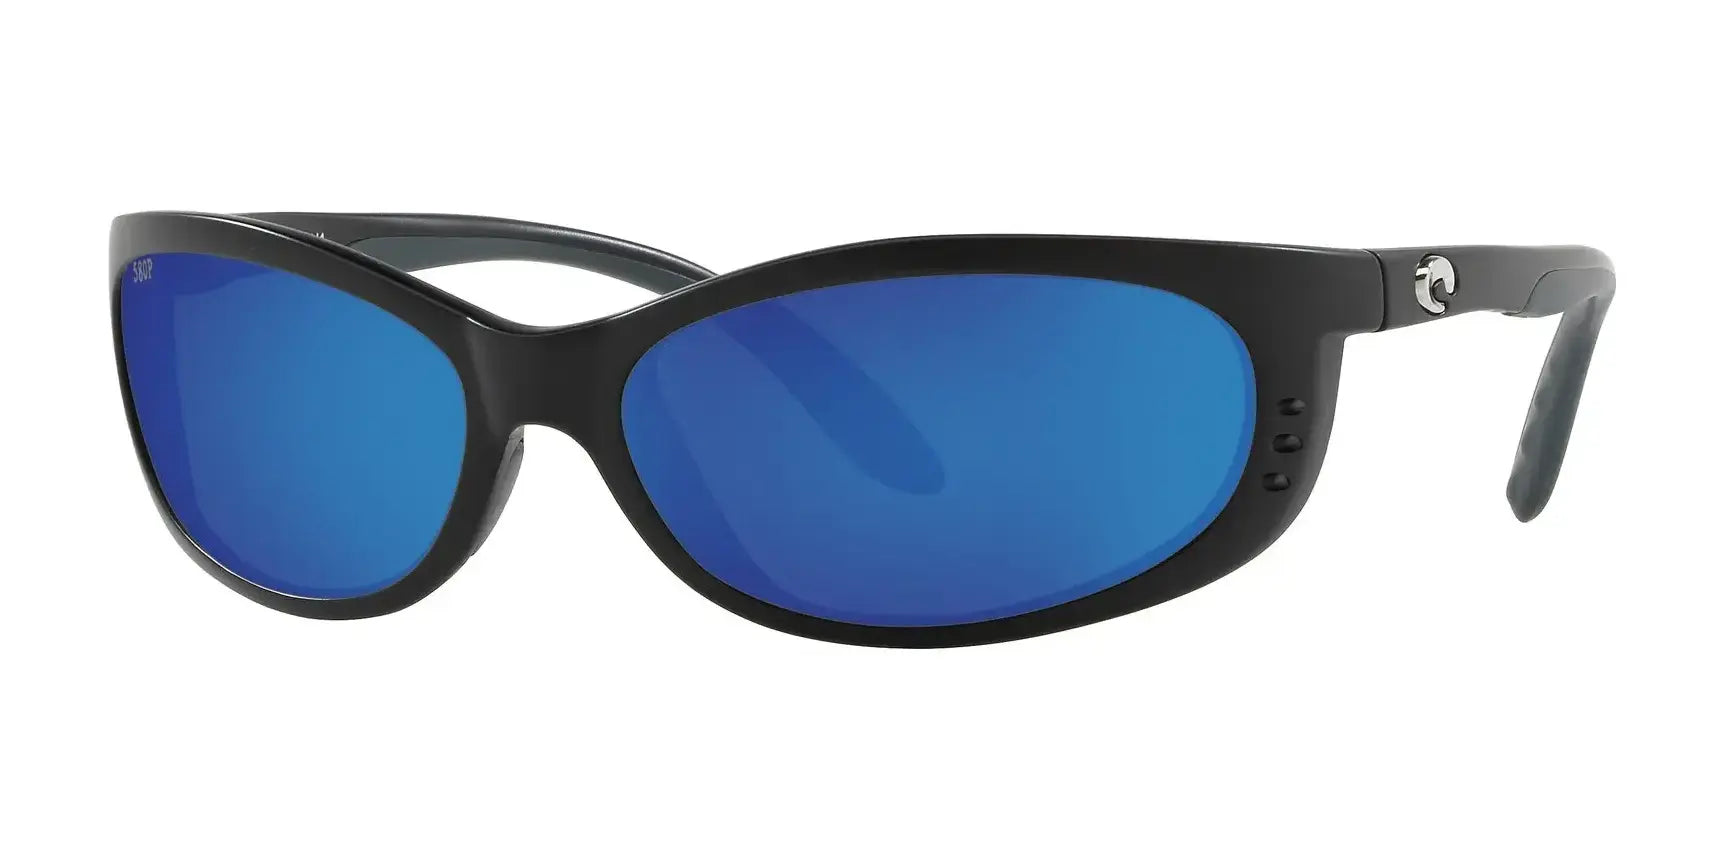 Costa FATHOM OMNIFIT 6S9058F Sunglasses Matte Black / Blue Mirror